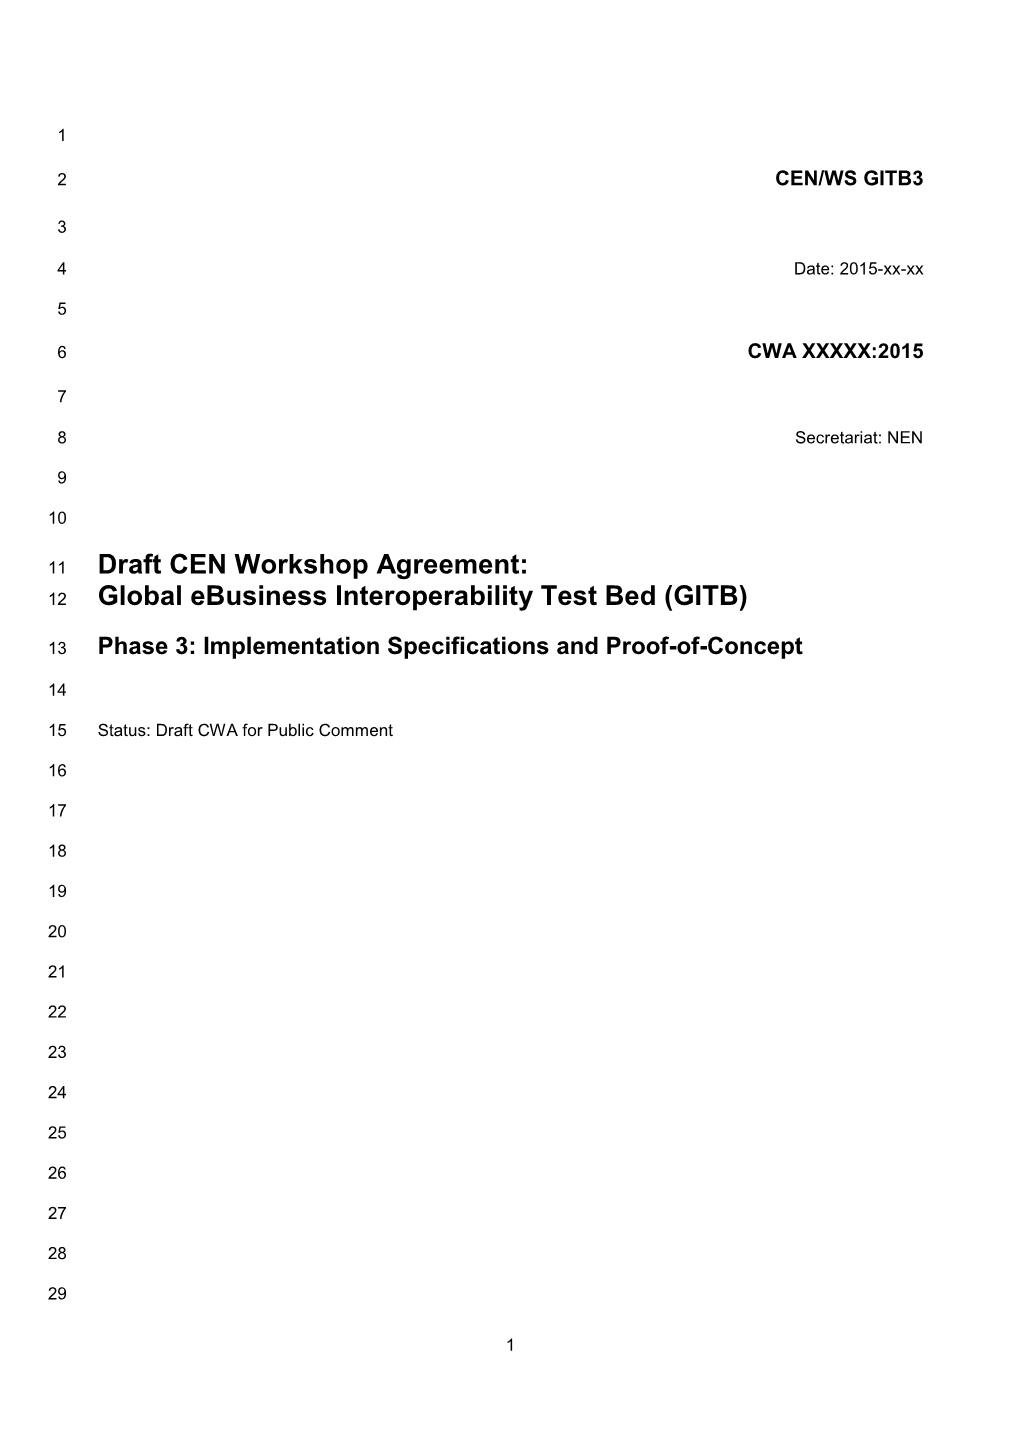 Draft CEN Workshop Agreement: Global Ebusiness Interoperability